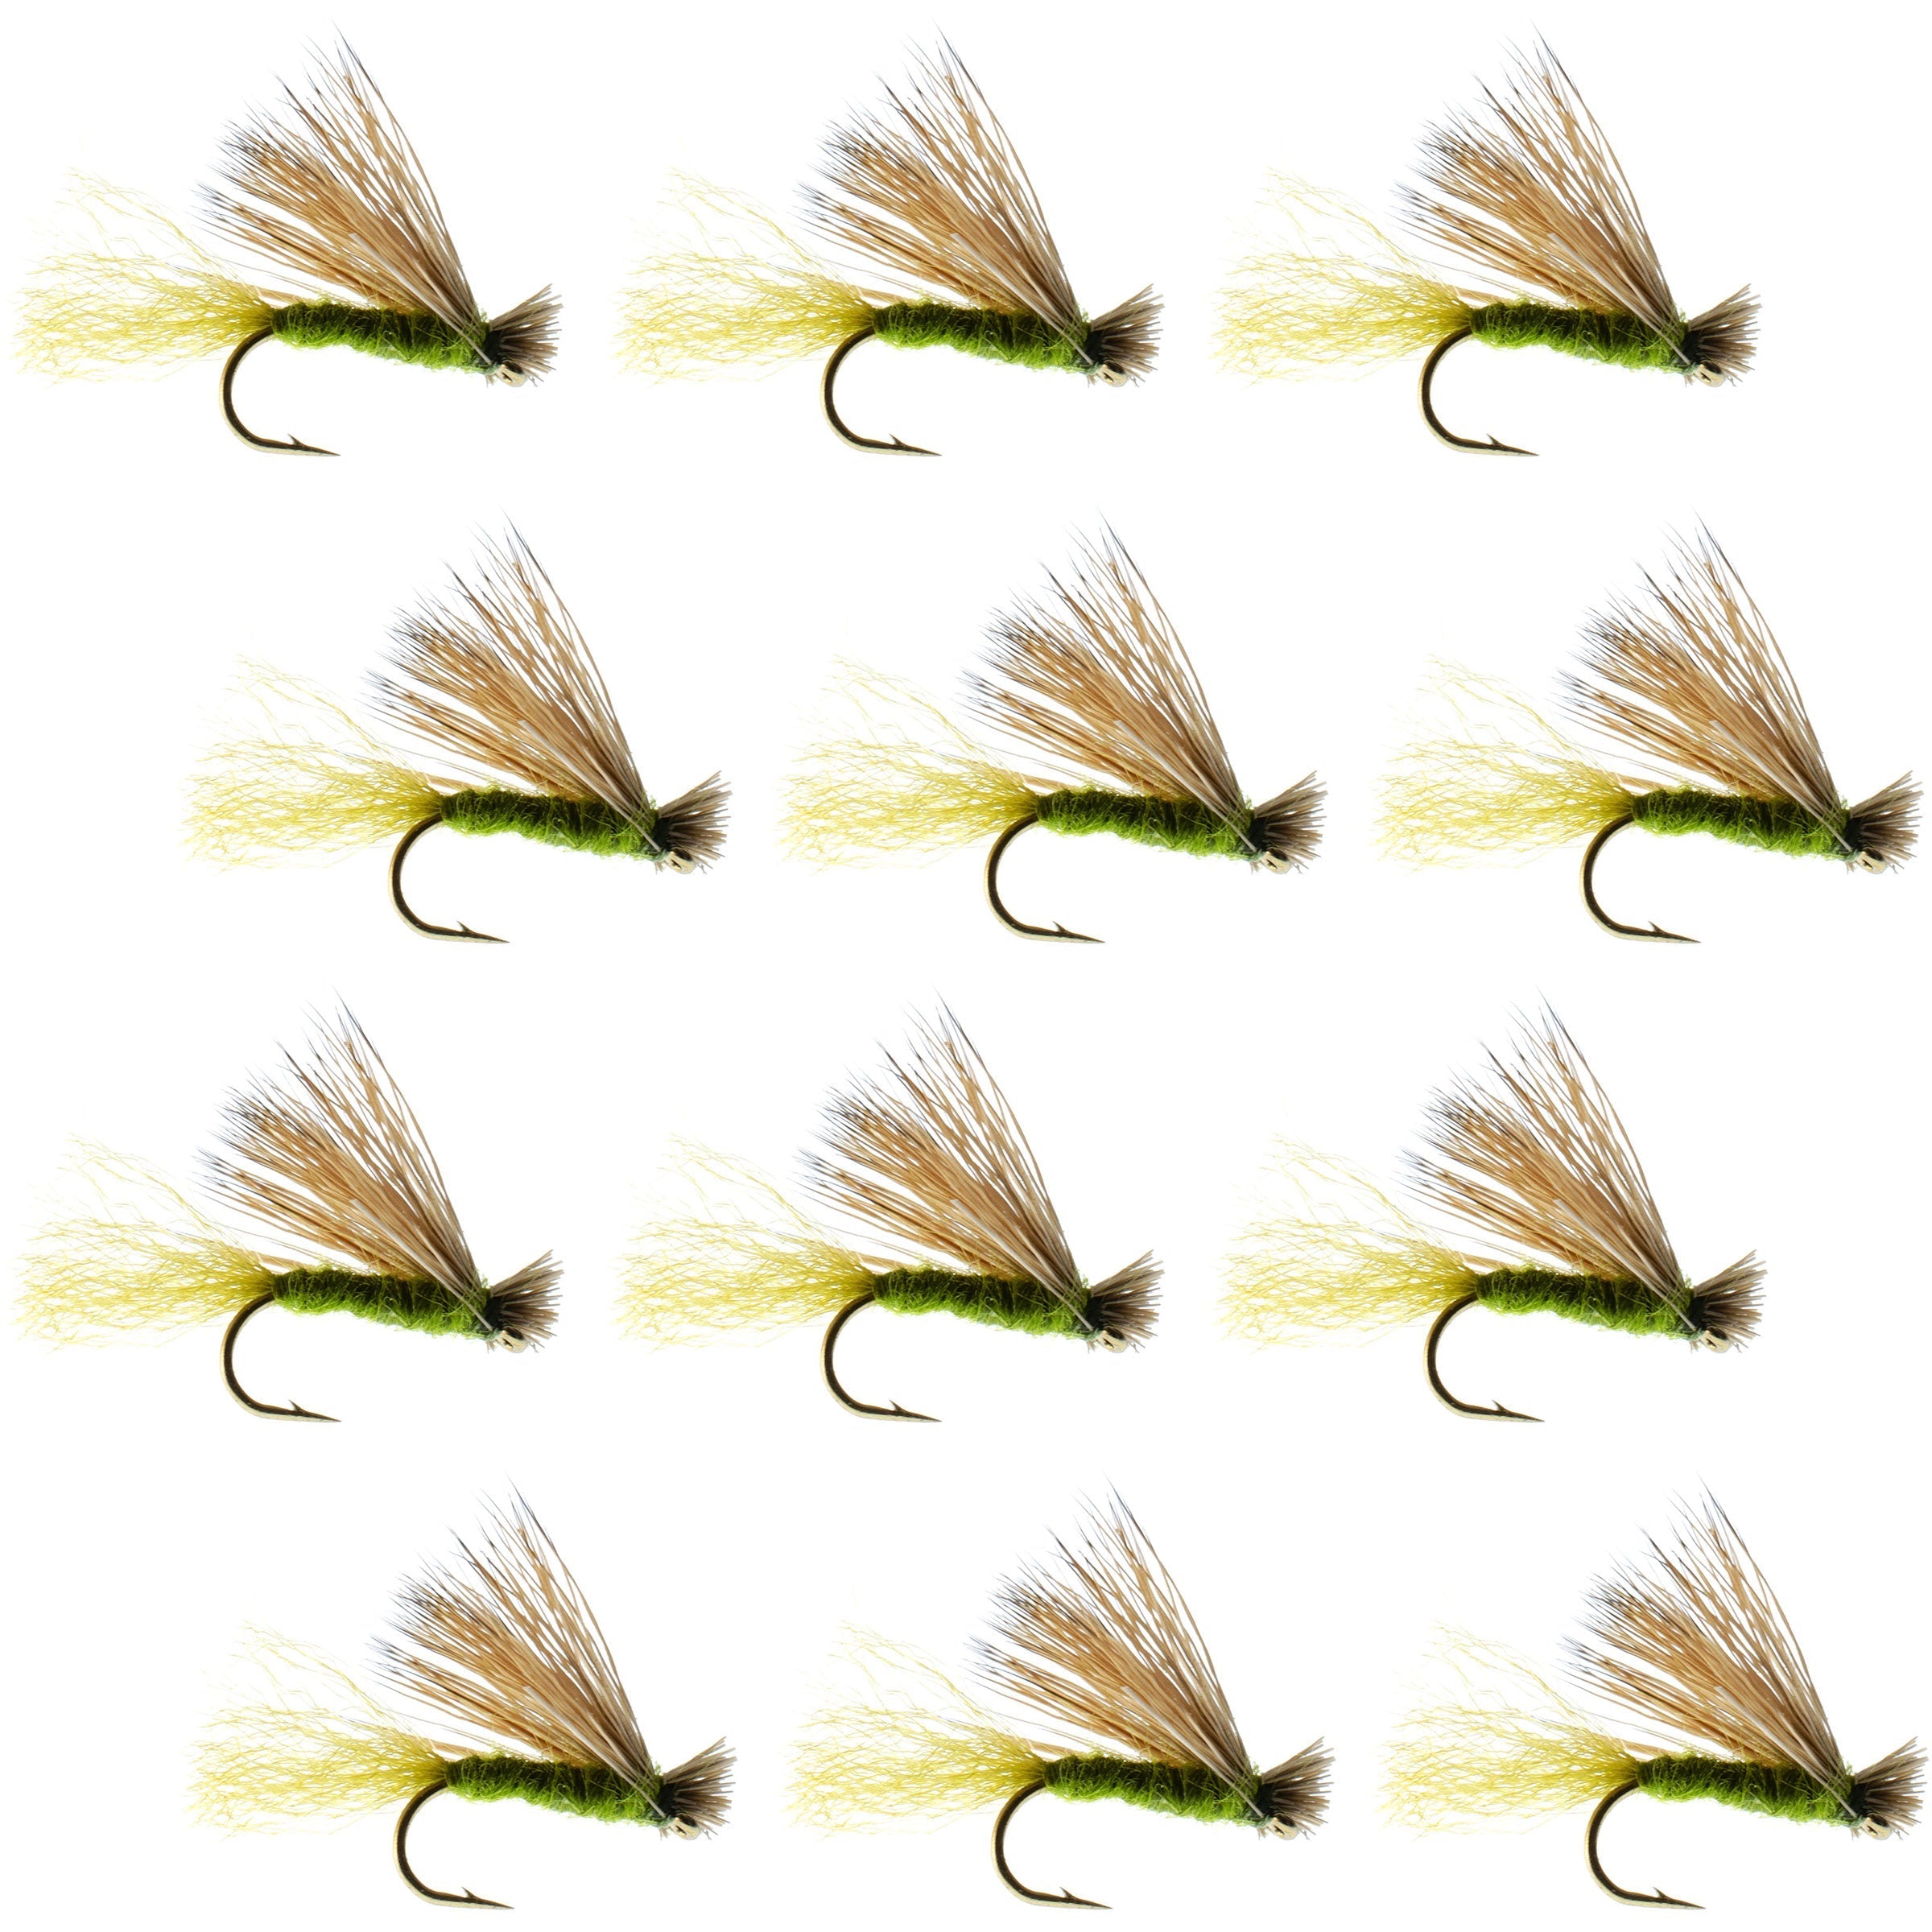 Olive X Caddis Emerging Caddis Adult Trout Dry Fly - 1 Dozen Flies Hook Size 14